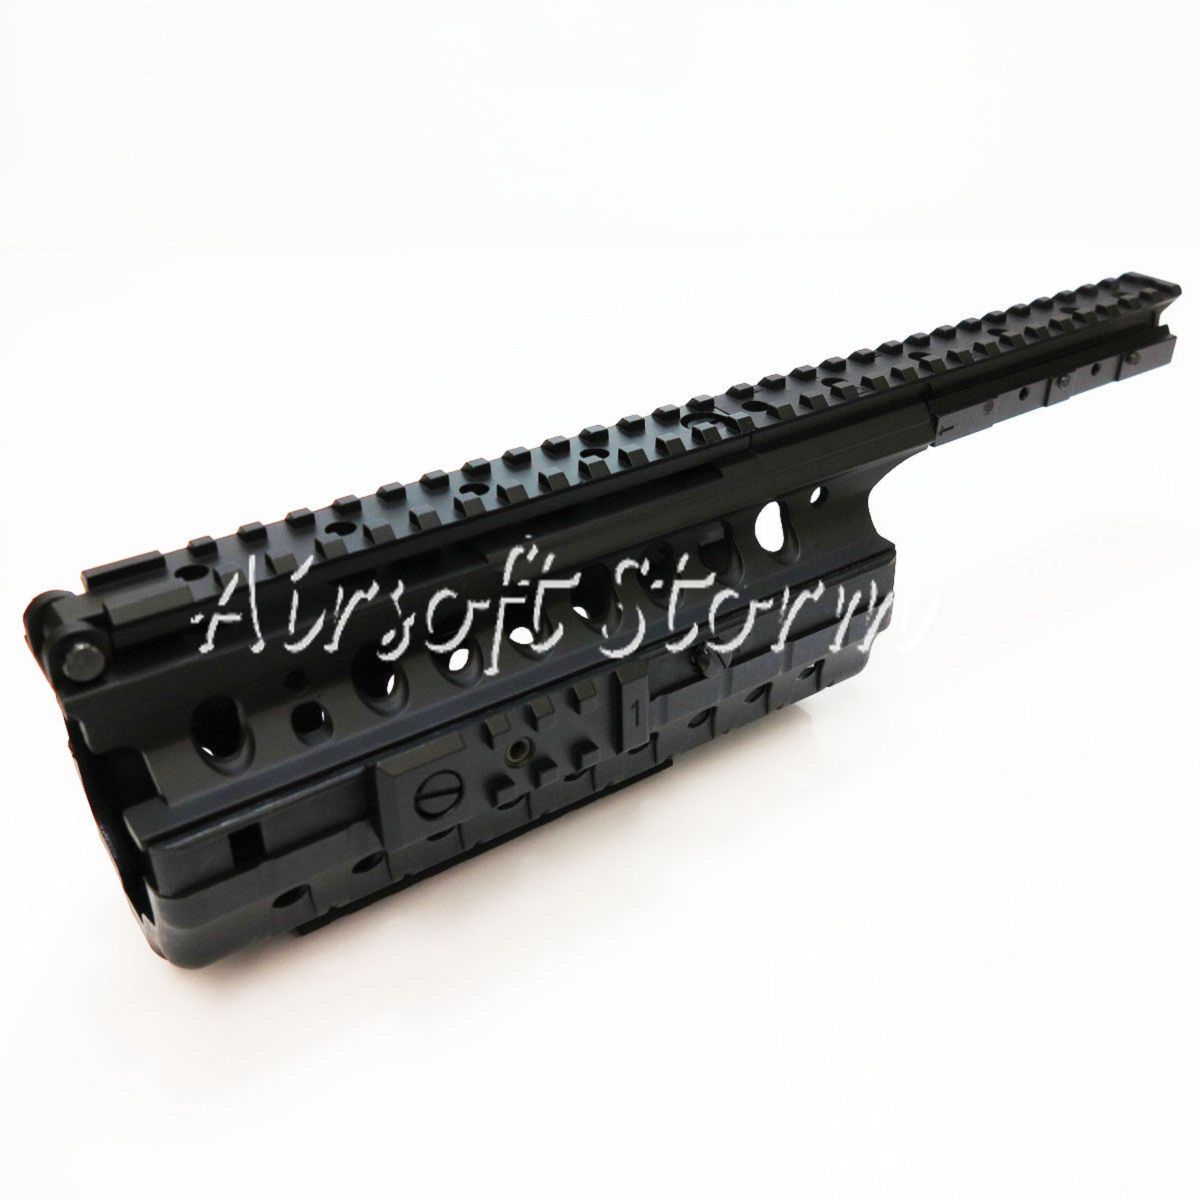 Shooting Gear D-Boys ARMS Style SIR System Rail Handguard for M4 Series AEG